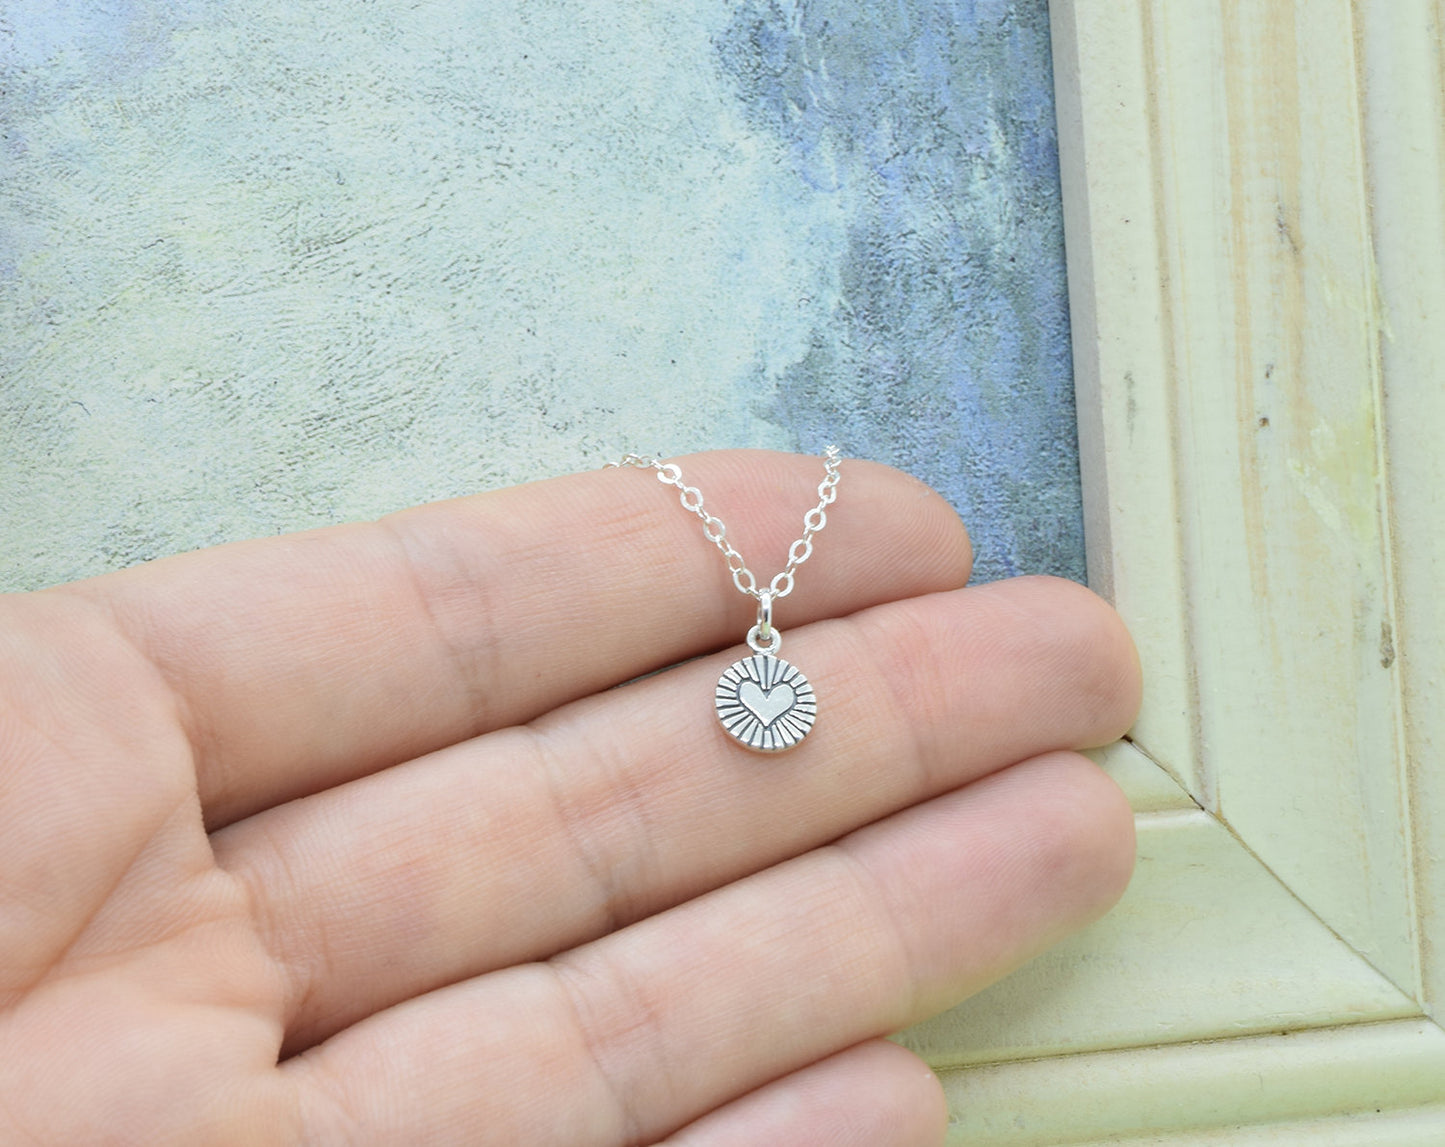 Silver Tiny Heart Necklace